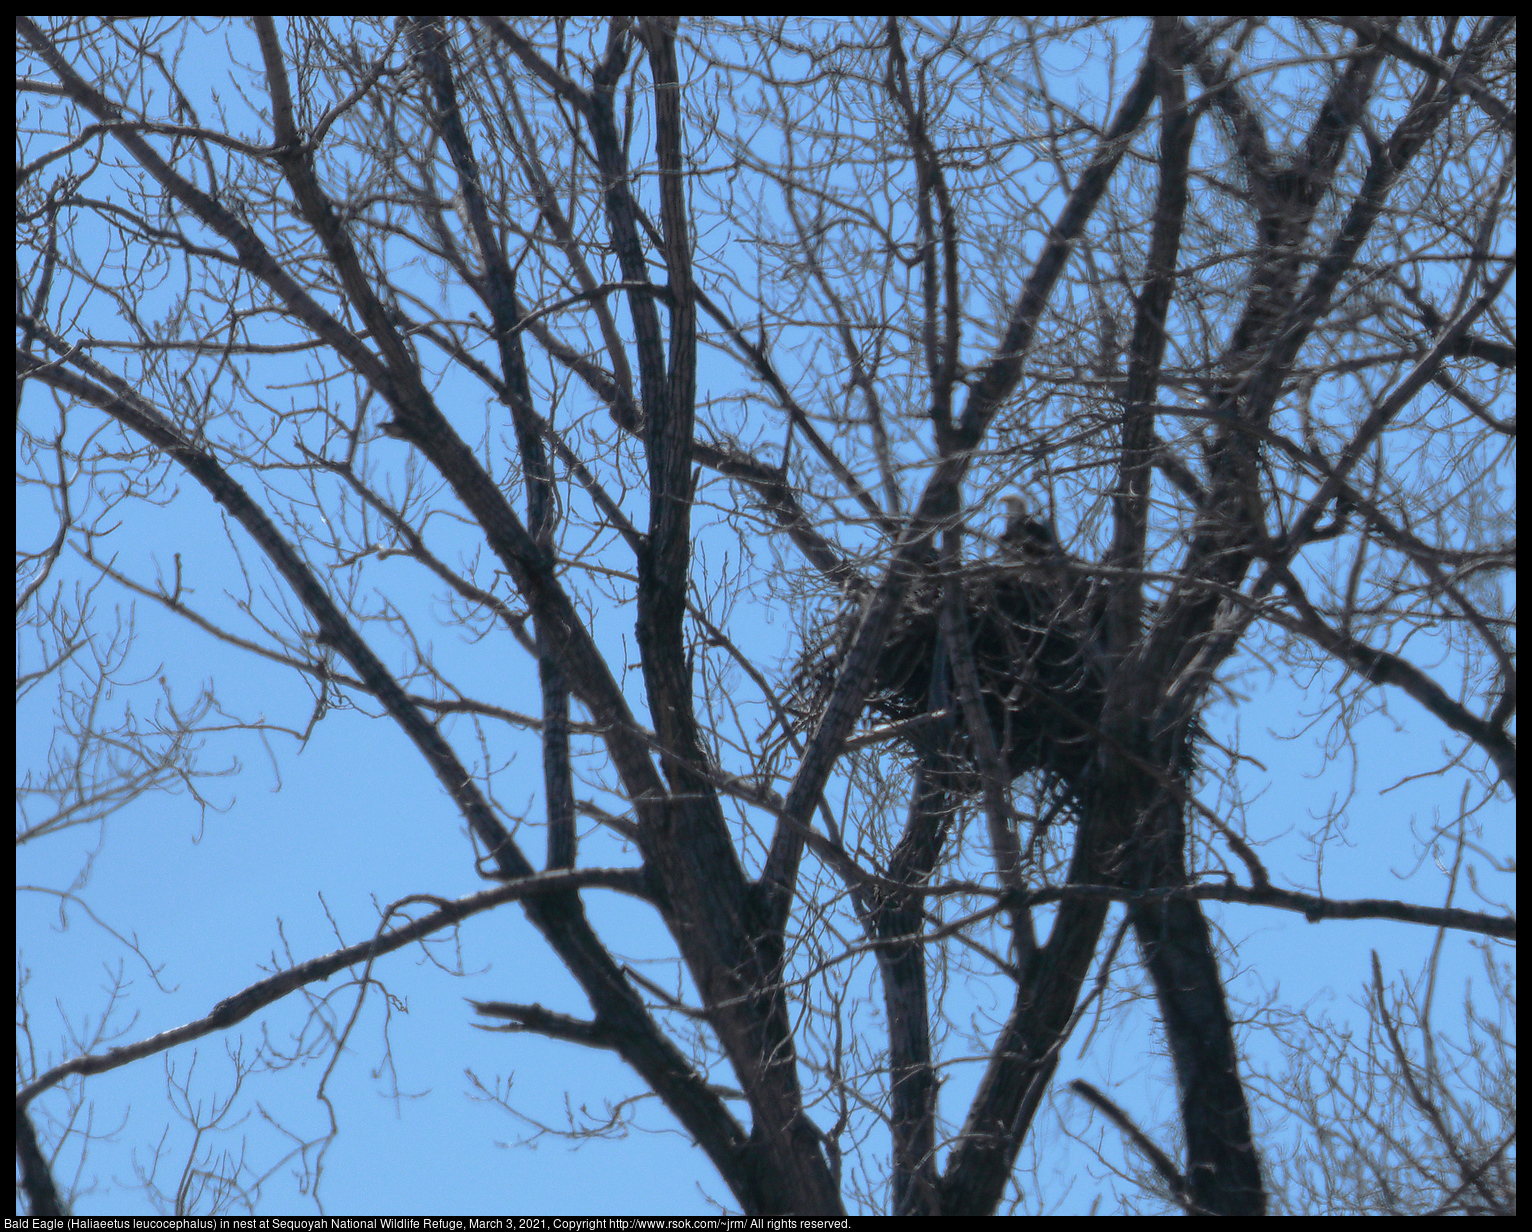 Bald Eagle (Haliaeetus leucocephalus) in nest at Sequoyah National Wildlife Refuge, March 3, 2021